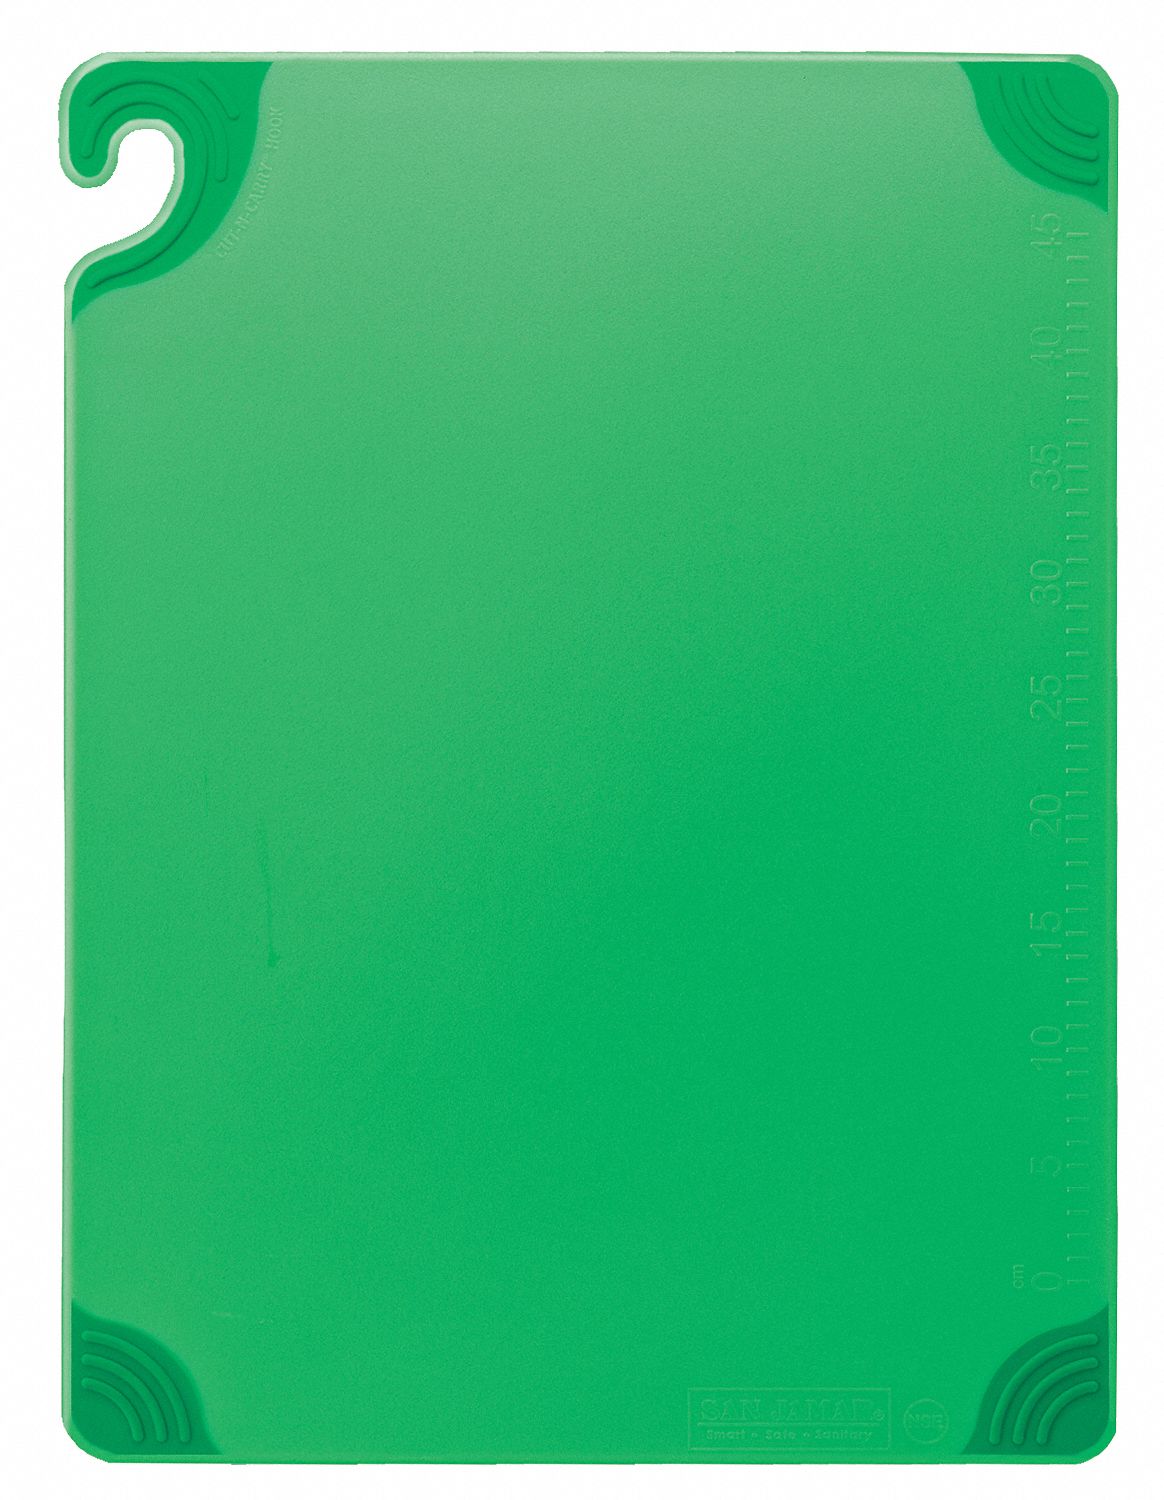 6AZW4 - Cutting Board 12x18 Green